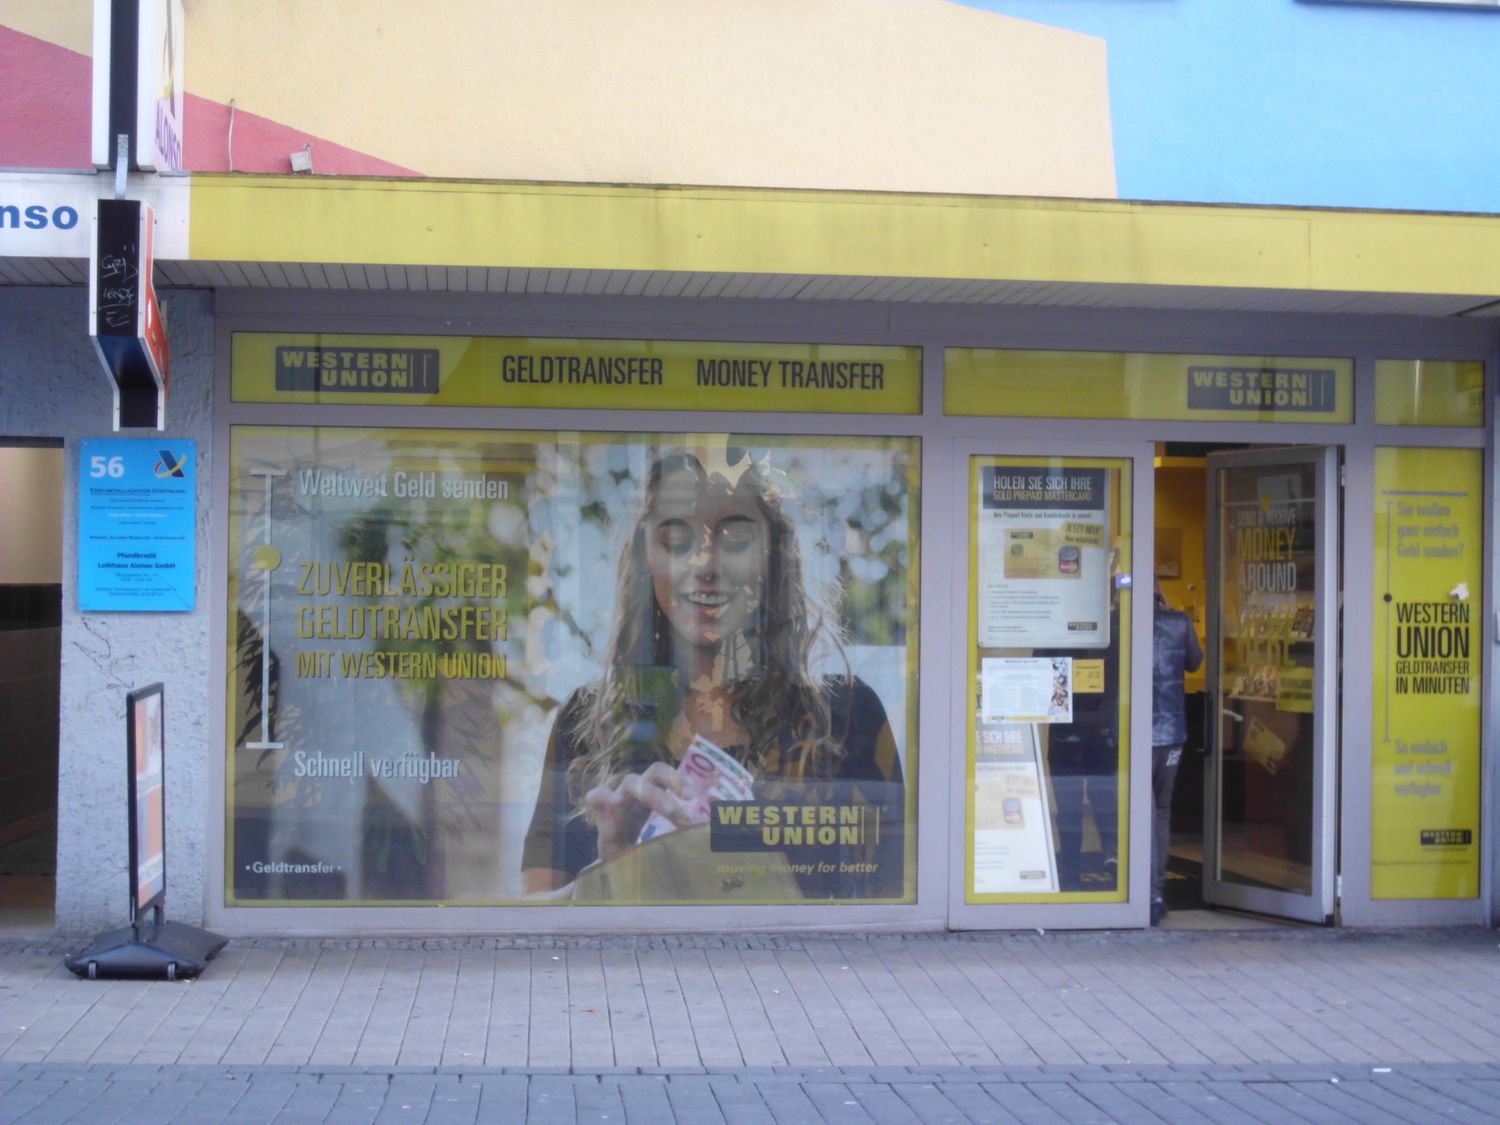 Western Union Bank - 2 Fotos - Dortmund Mitte - Lütge Brückstraße | golocal